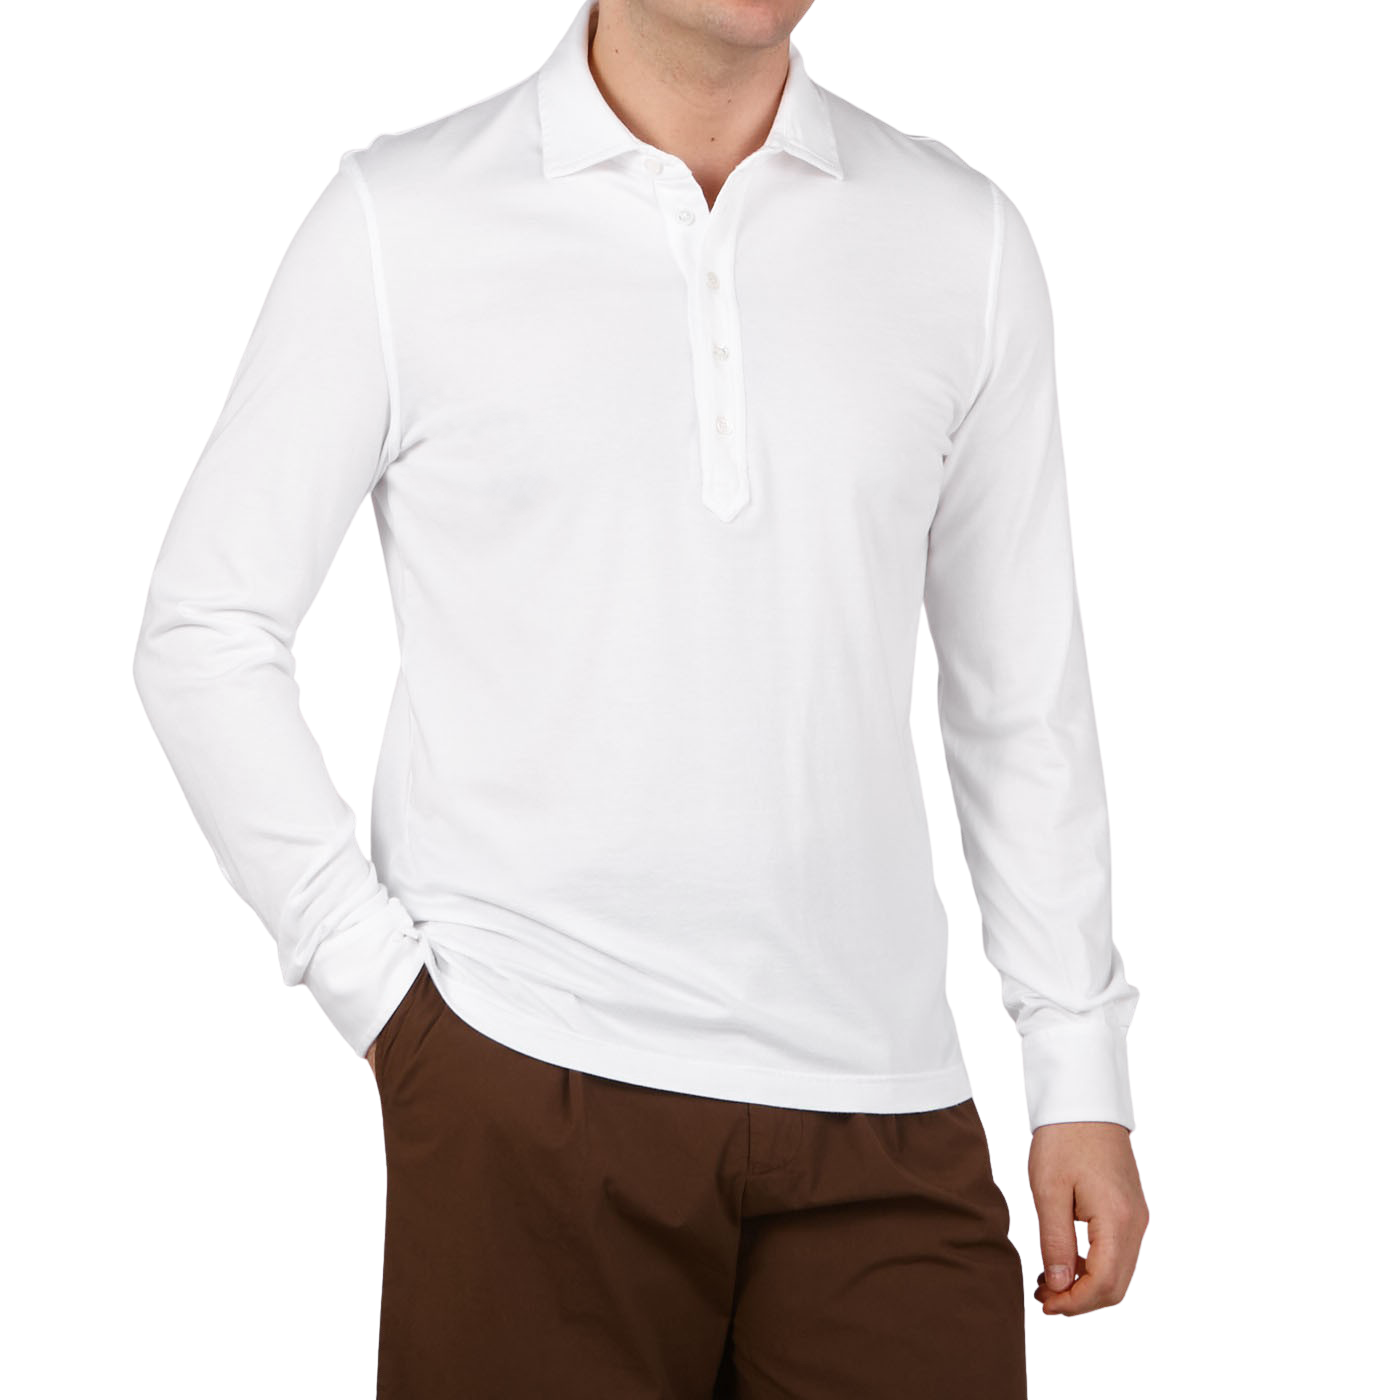 Fedeli White Giza Organic Cotton Polo Shirt Front